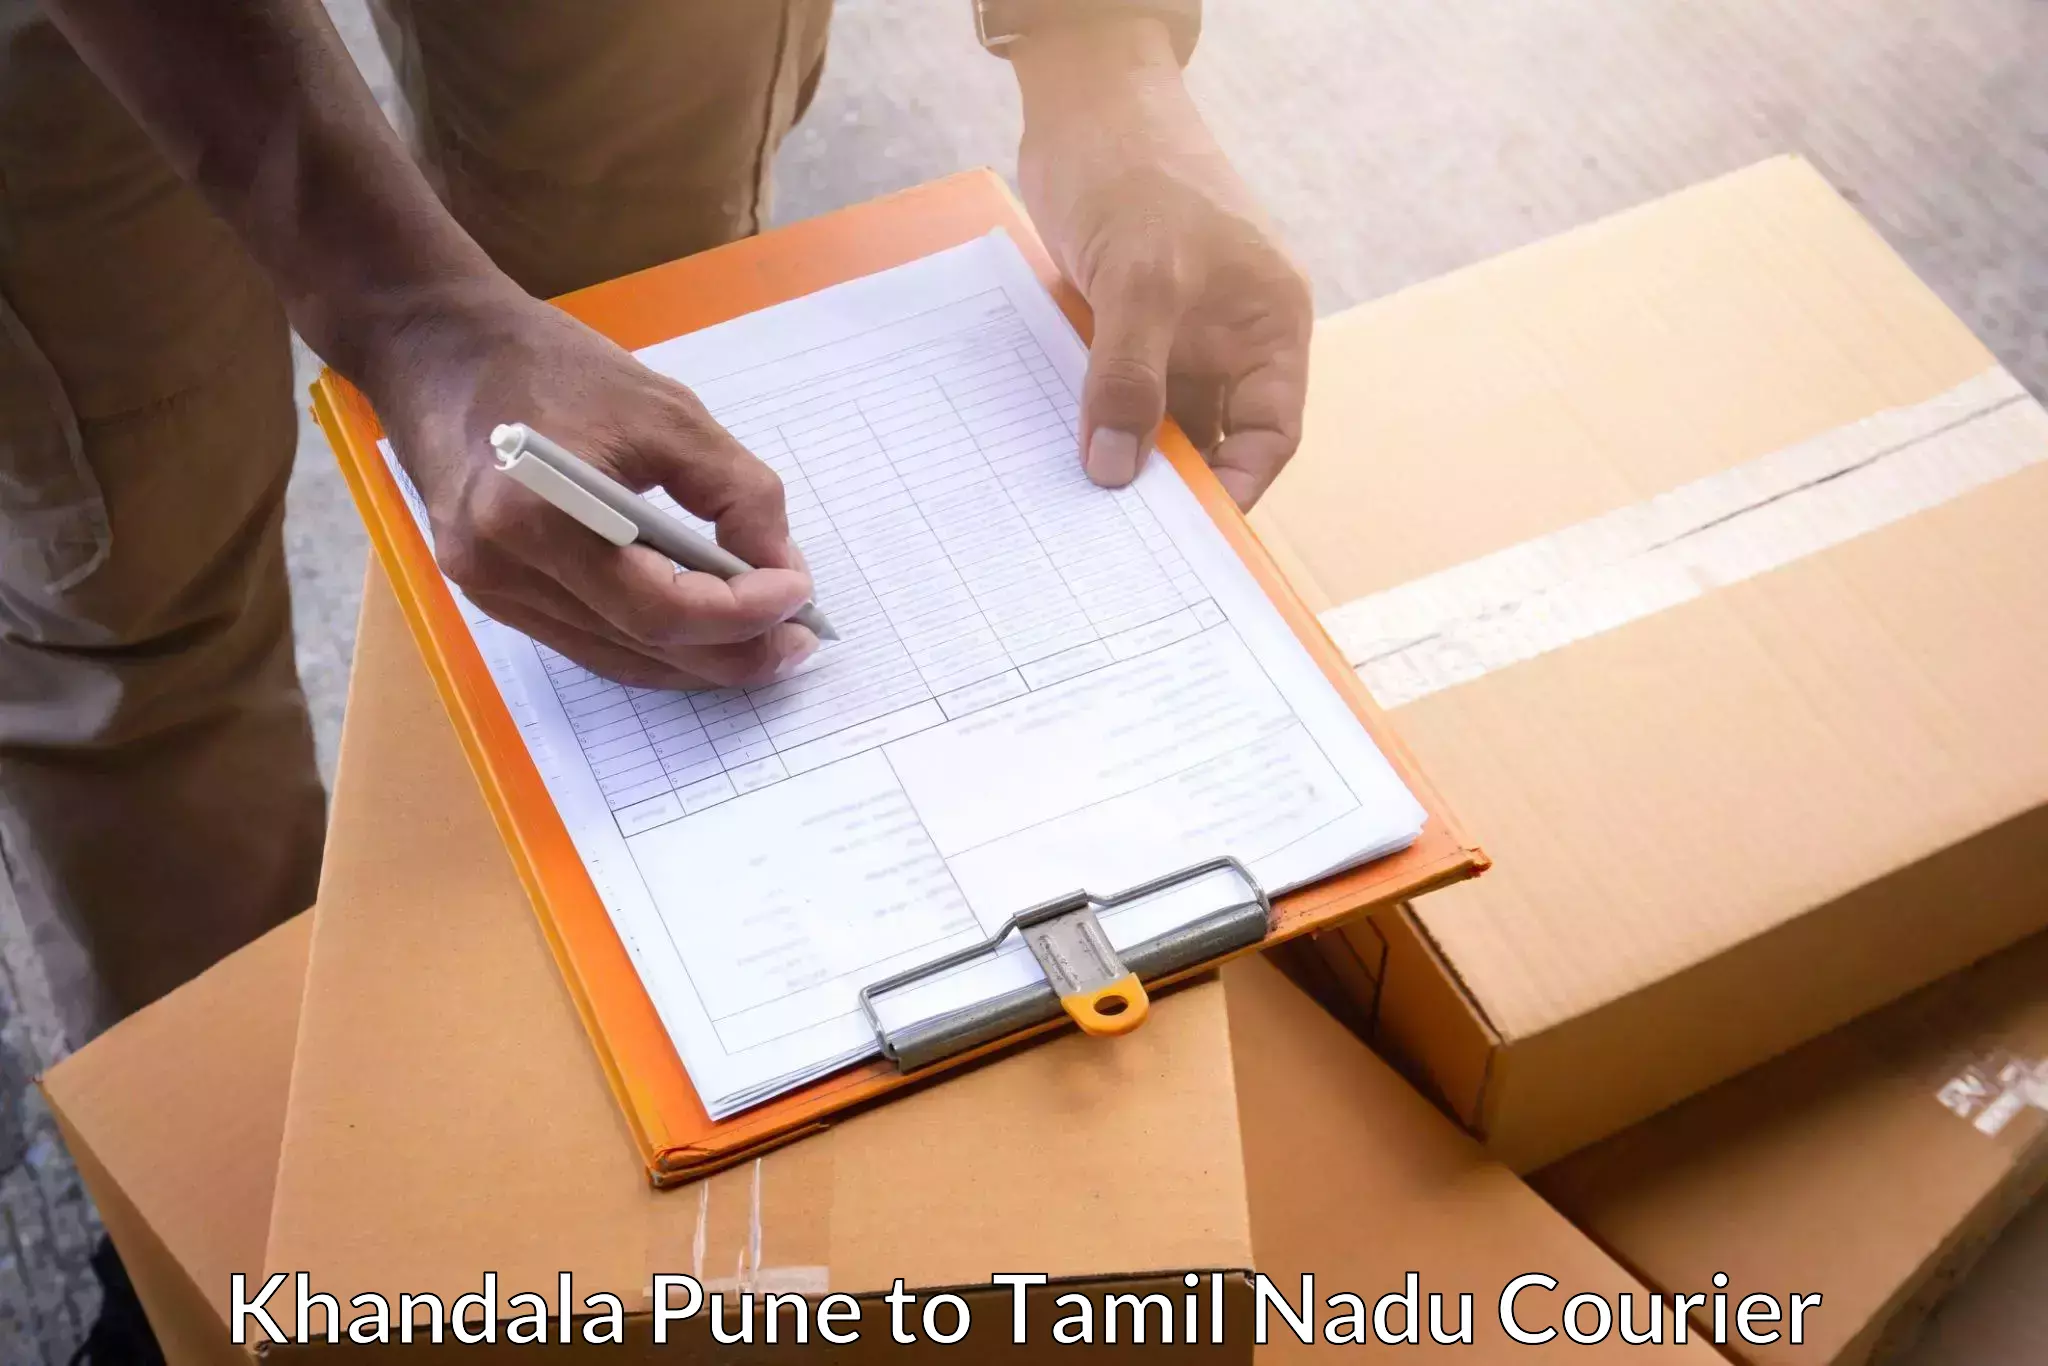 Express postal services Khandala Pune to Cumbum